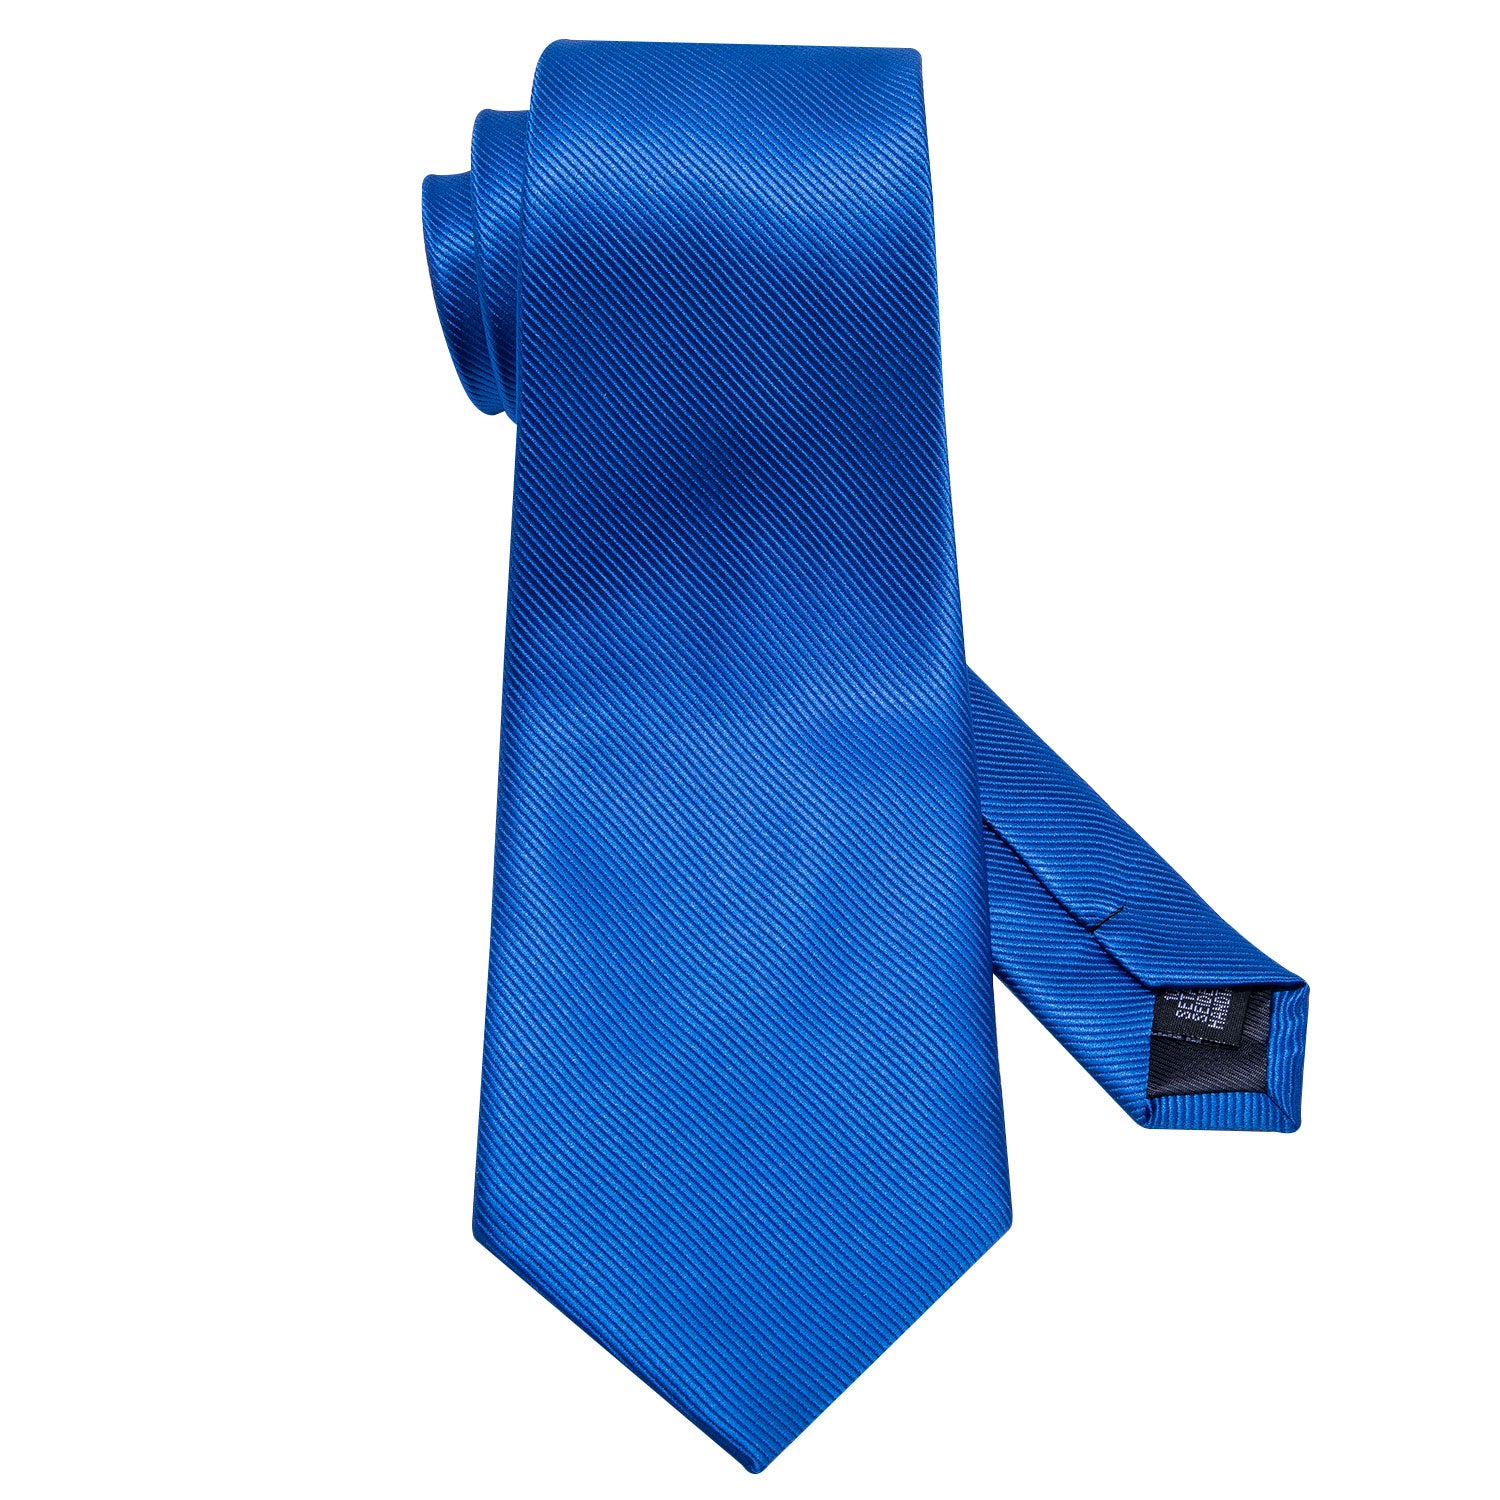 Barry.wang Blue Tie Classic Solid Silk Men's Tie Hanky Cufflinks Set